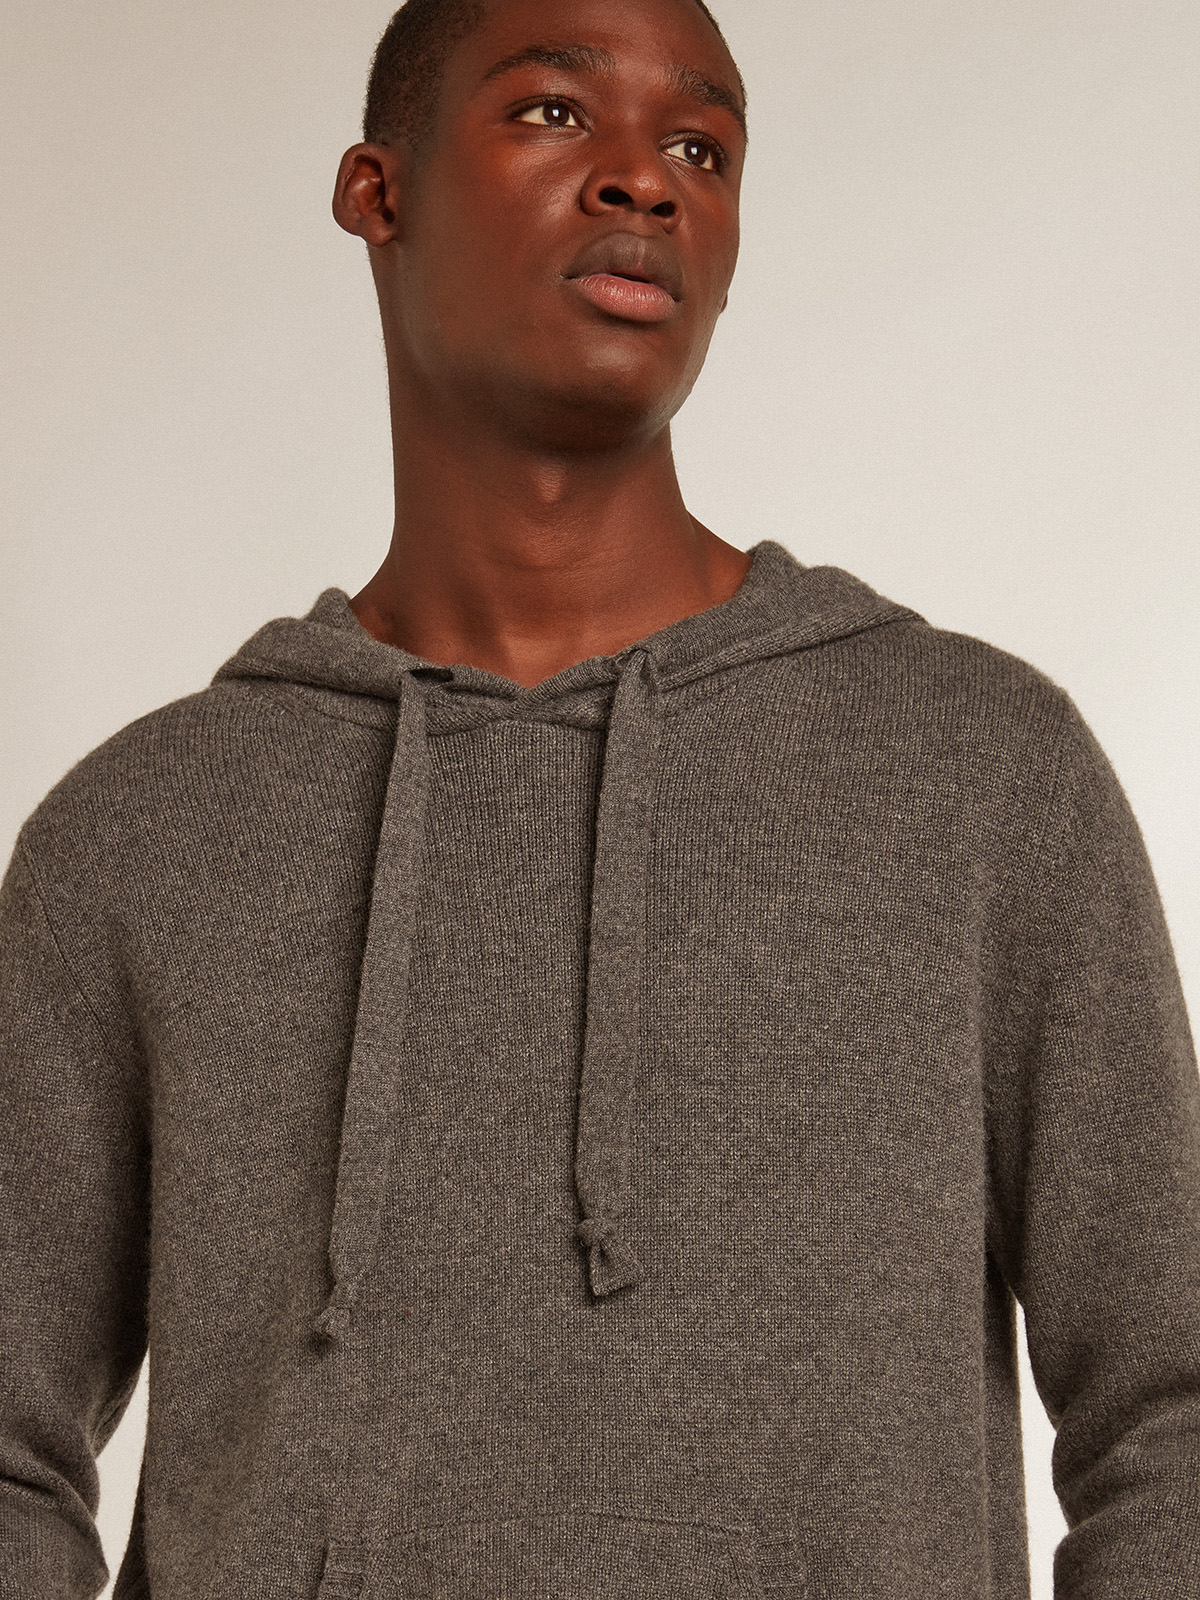 Men's gray melange cashmere blend sweatshirt with hood